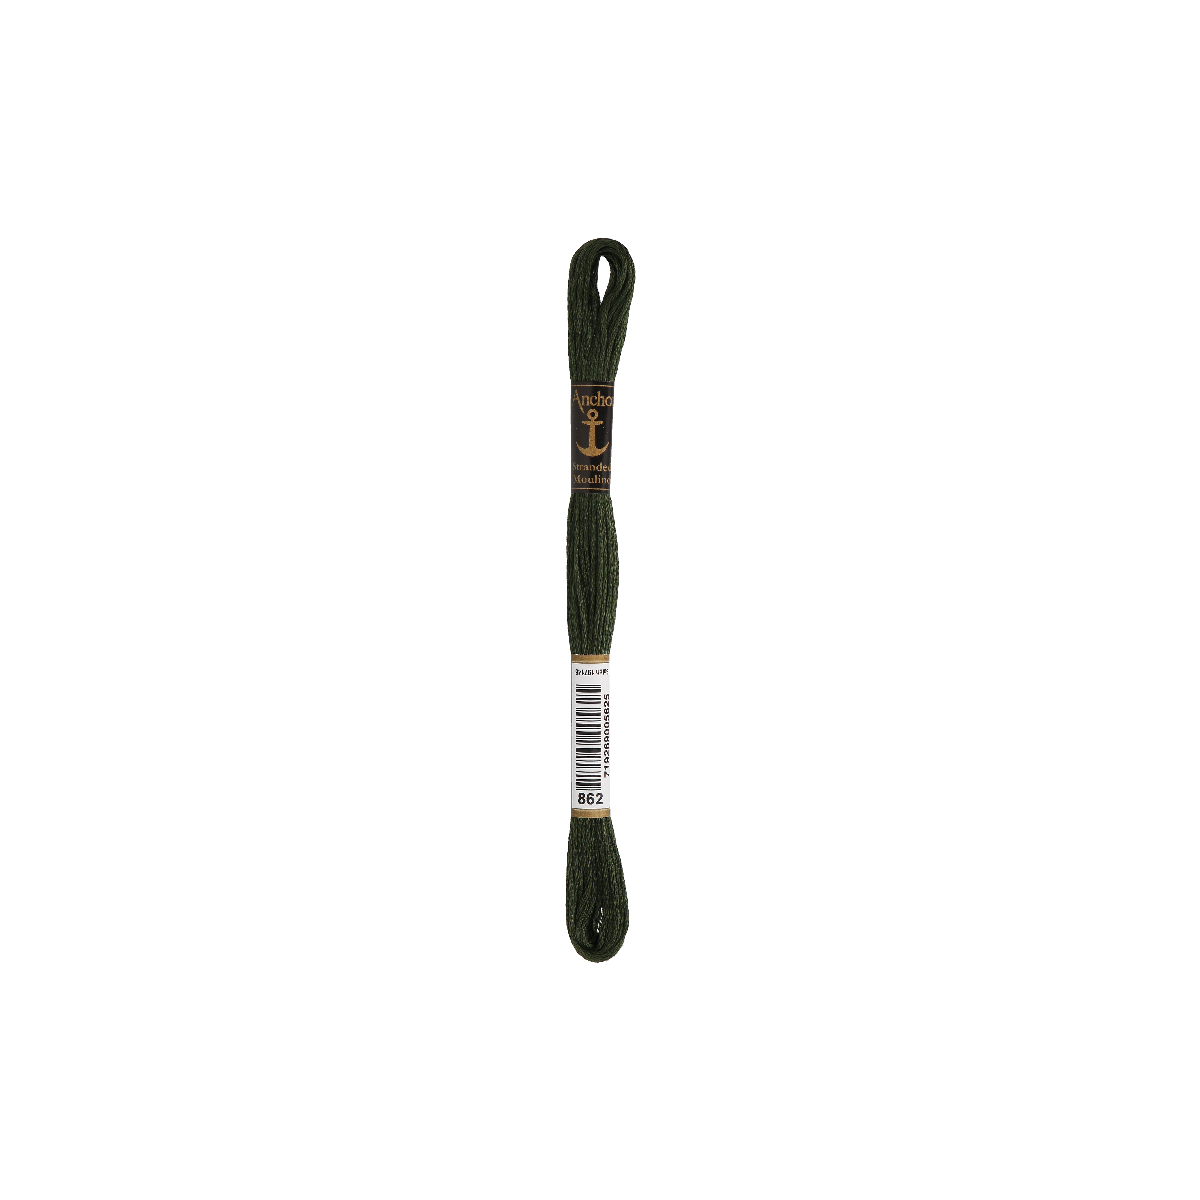 Anchor Sticktwist 8m, verde russo, cotone, colore 862, 6...